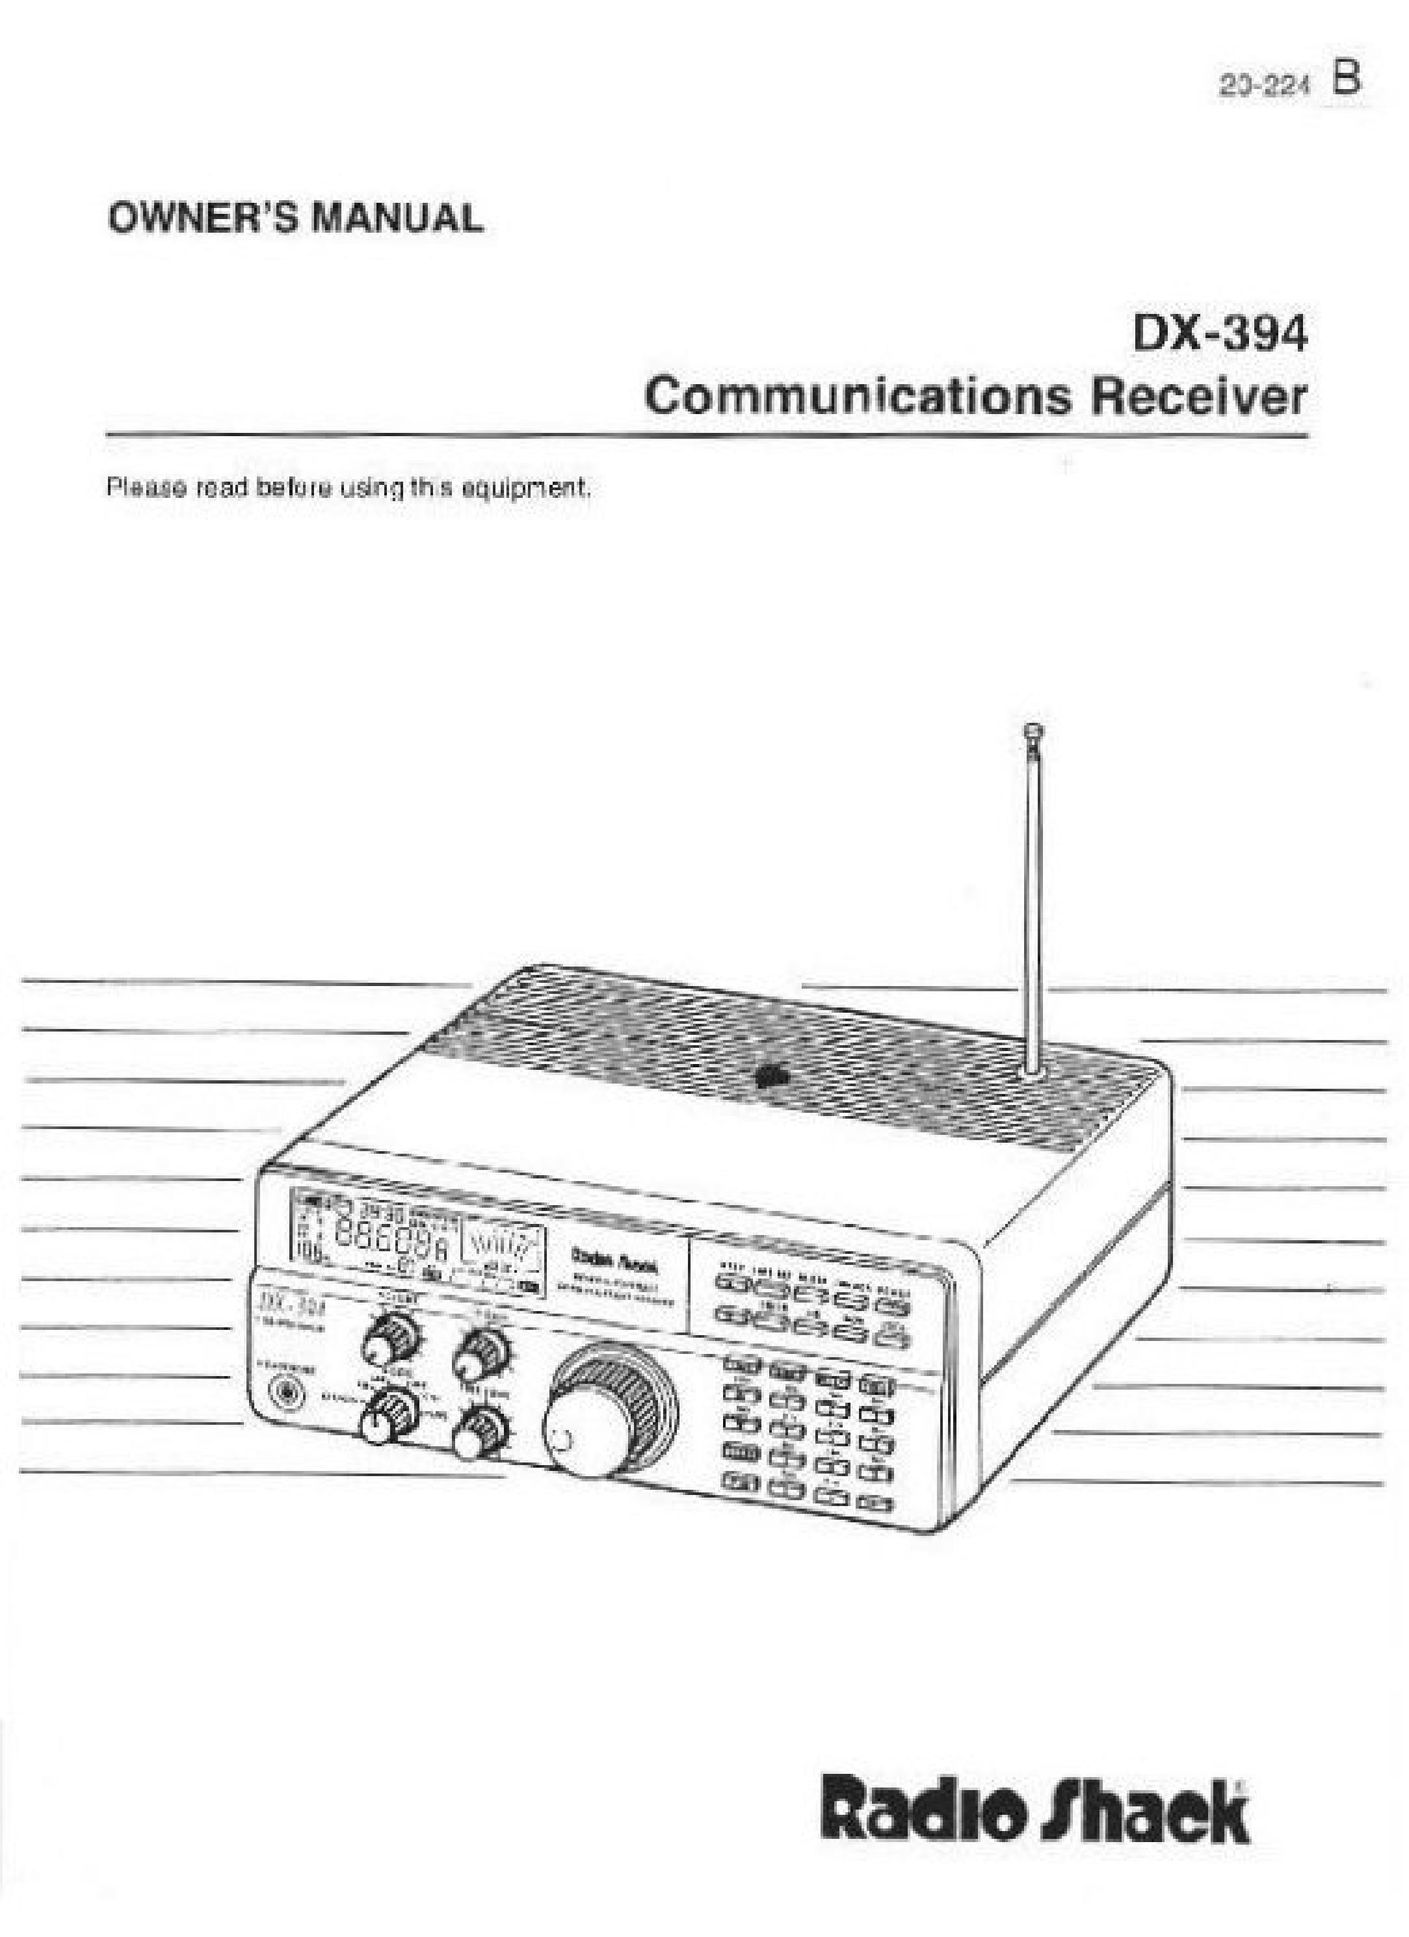 Radio Shack DX-394 Car Satellite TV System User Manual